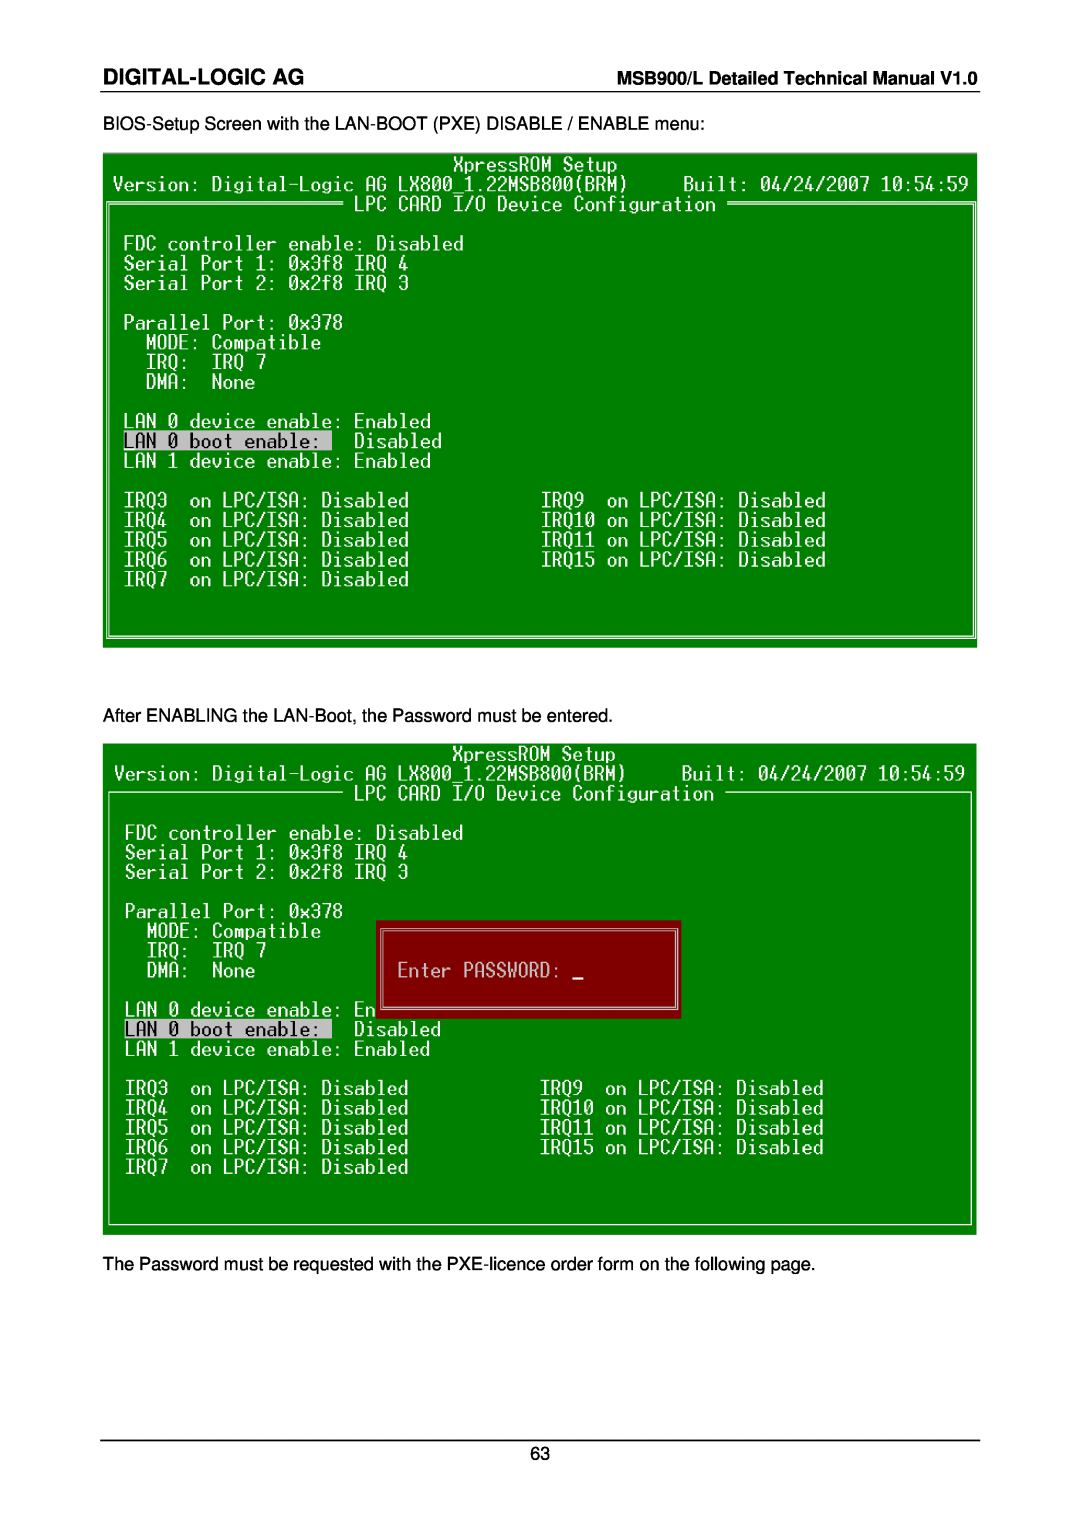 Compaq MSB900L user manual Digital-Logic Ag, BIOS-Setup Screen with the LAN-BOOT PXE DISABLE / ENABLE menu 